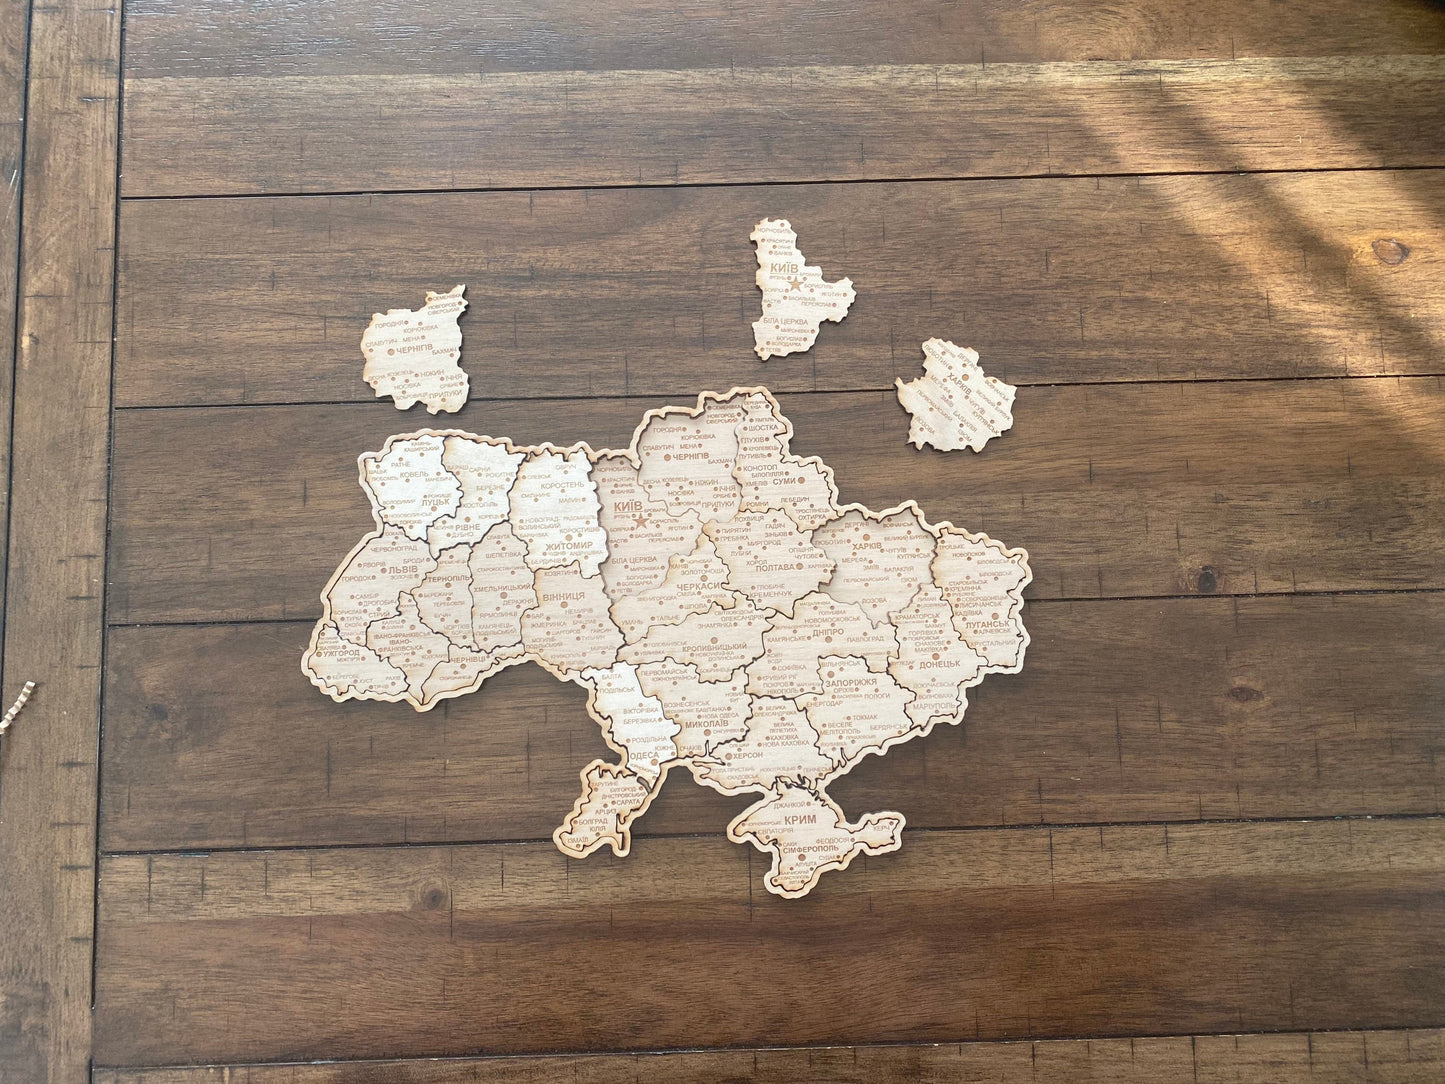 A custom set: Ukraine Map Puzzle - Jigsaw Puzzle